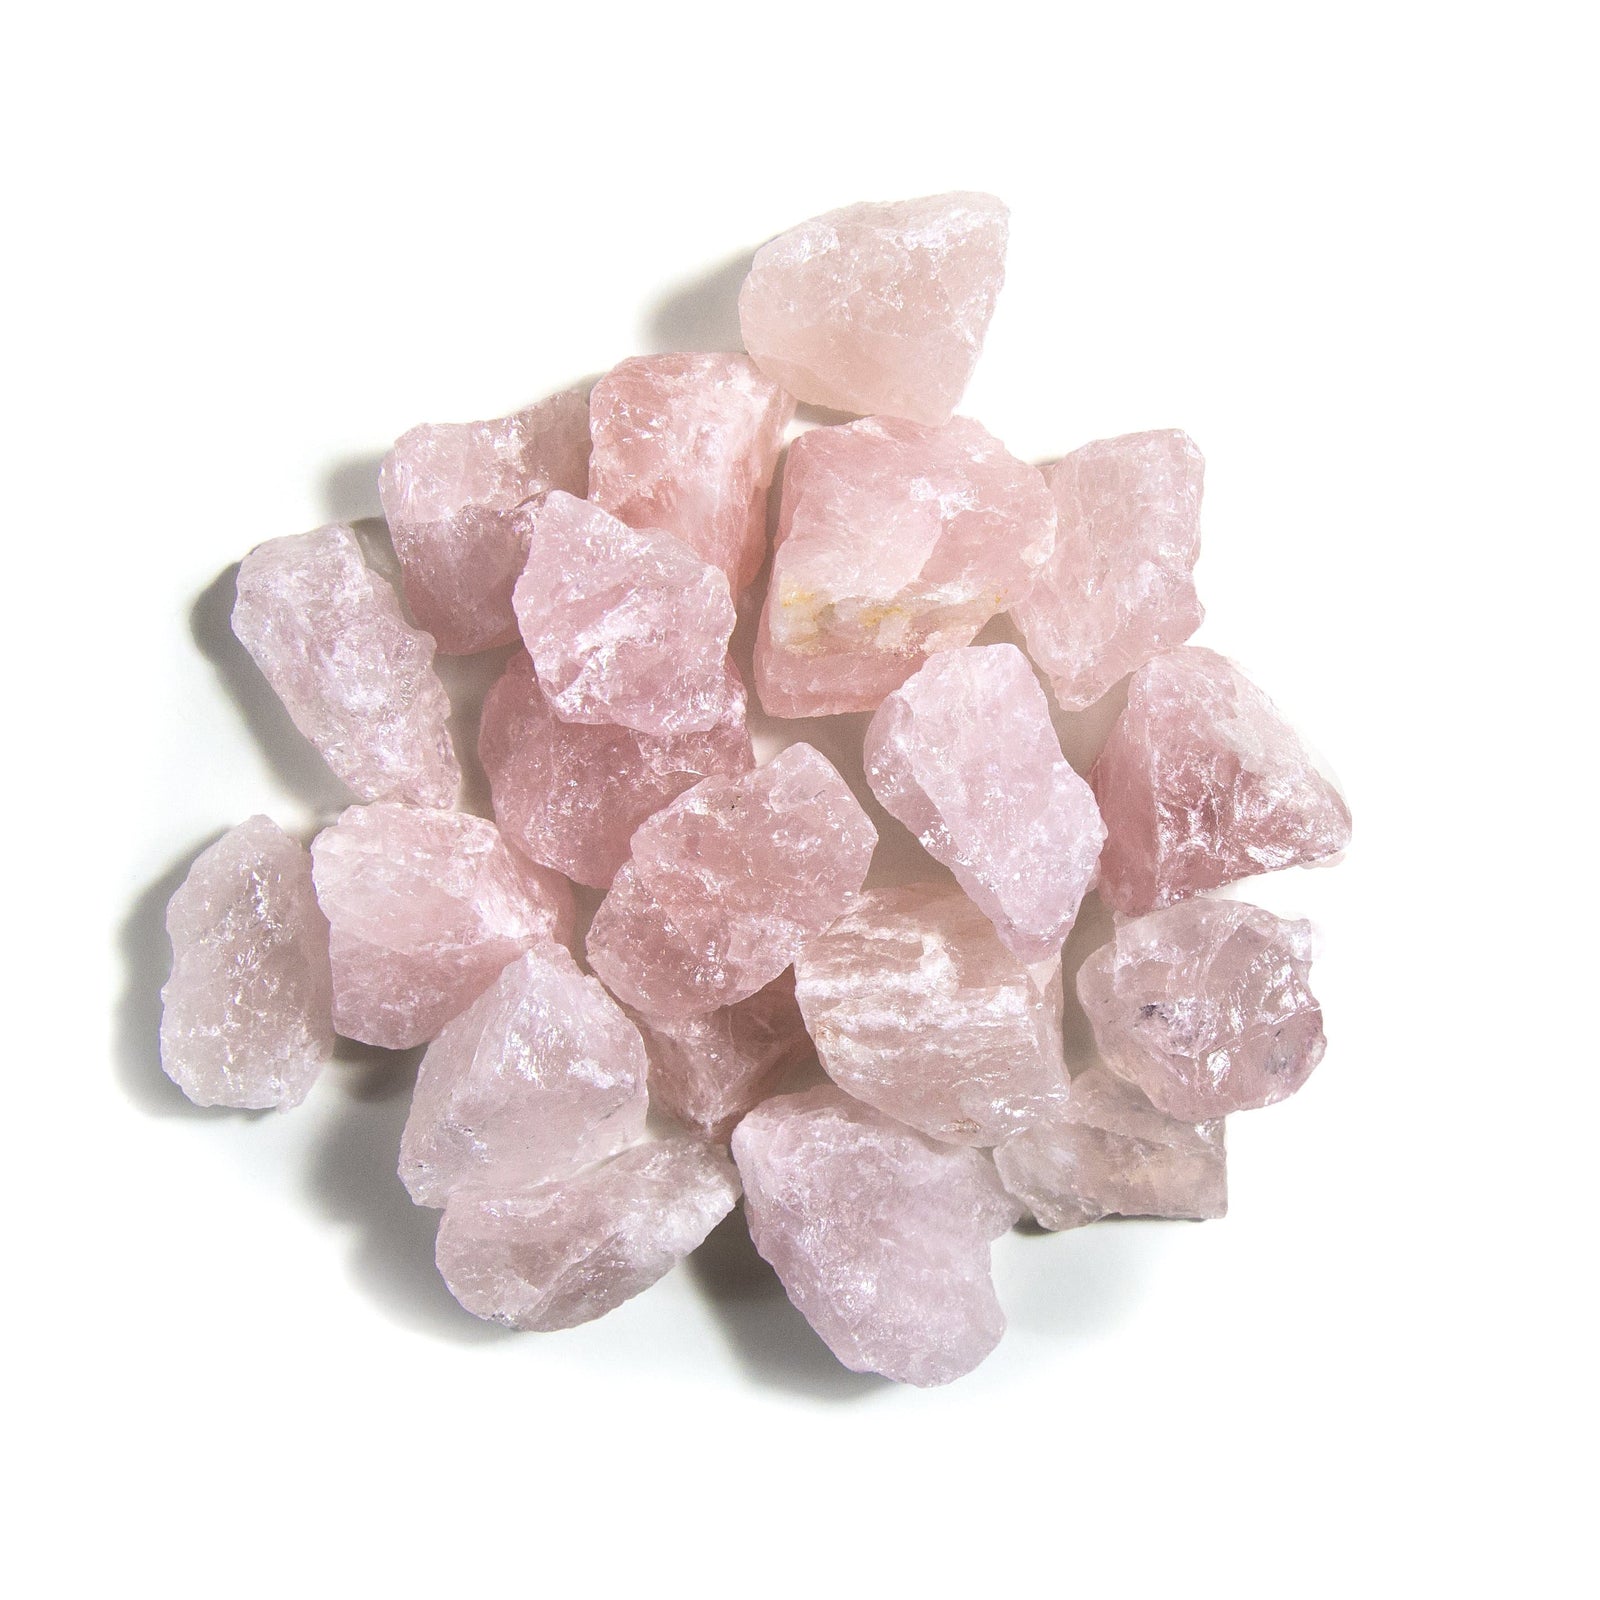 metaphysical uses for raw rose quartz